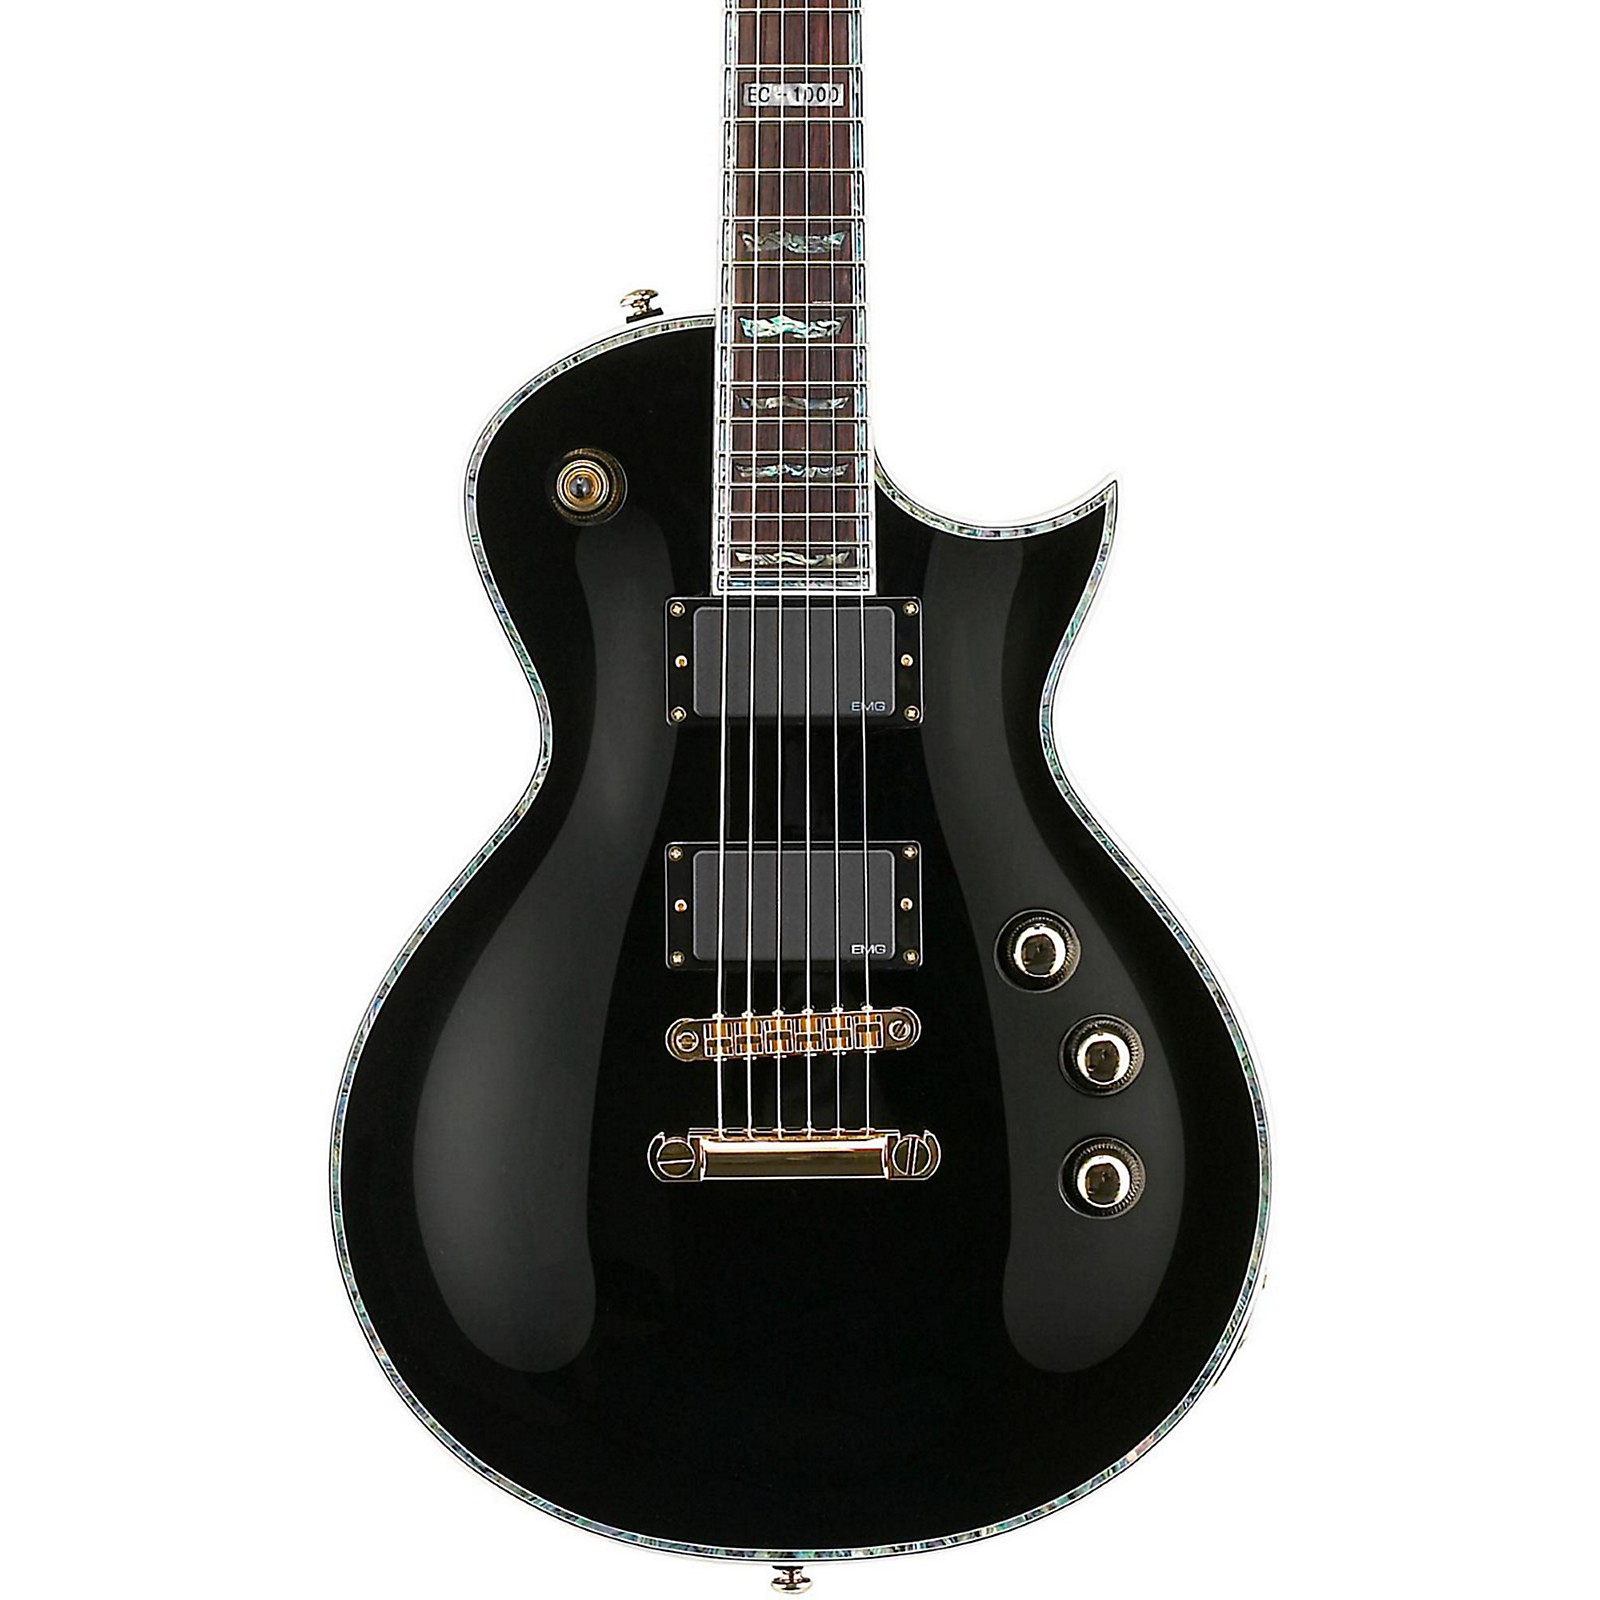 Esp Ltd Deluxe Ec 1000 Electric Guitar Black Guitar Center